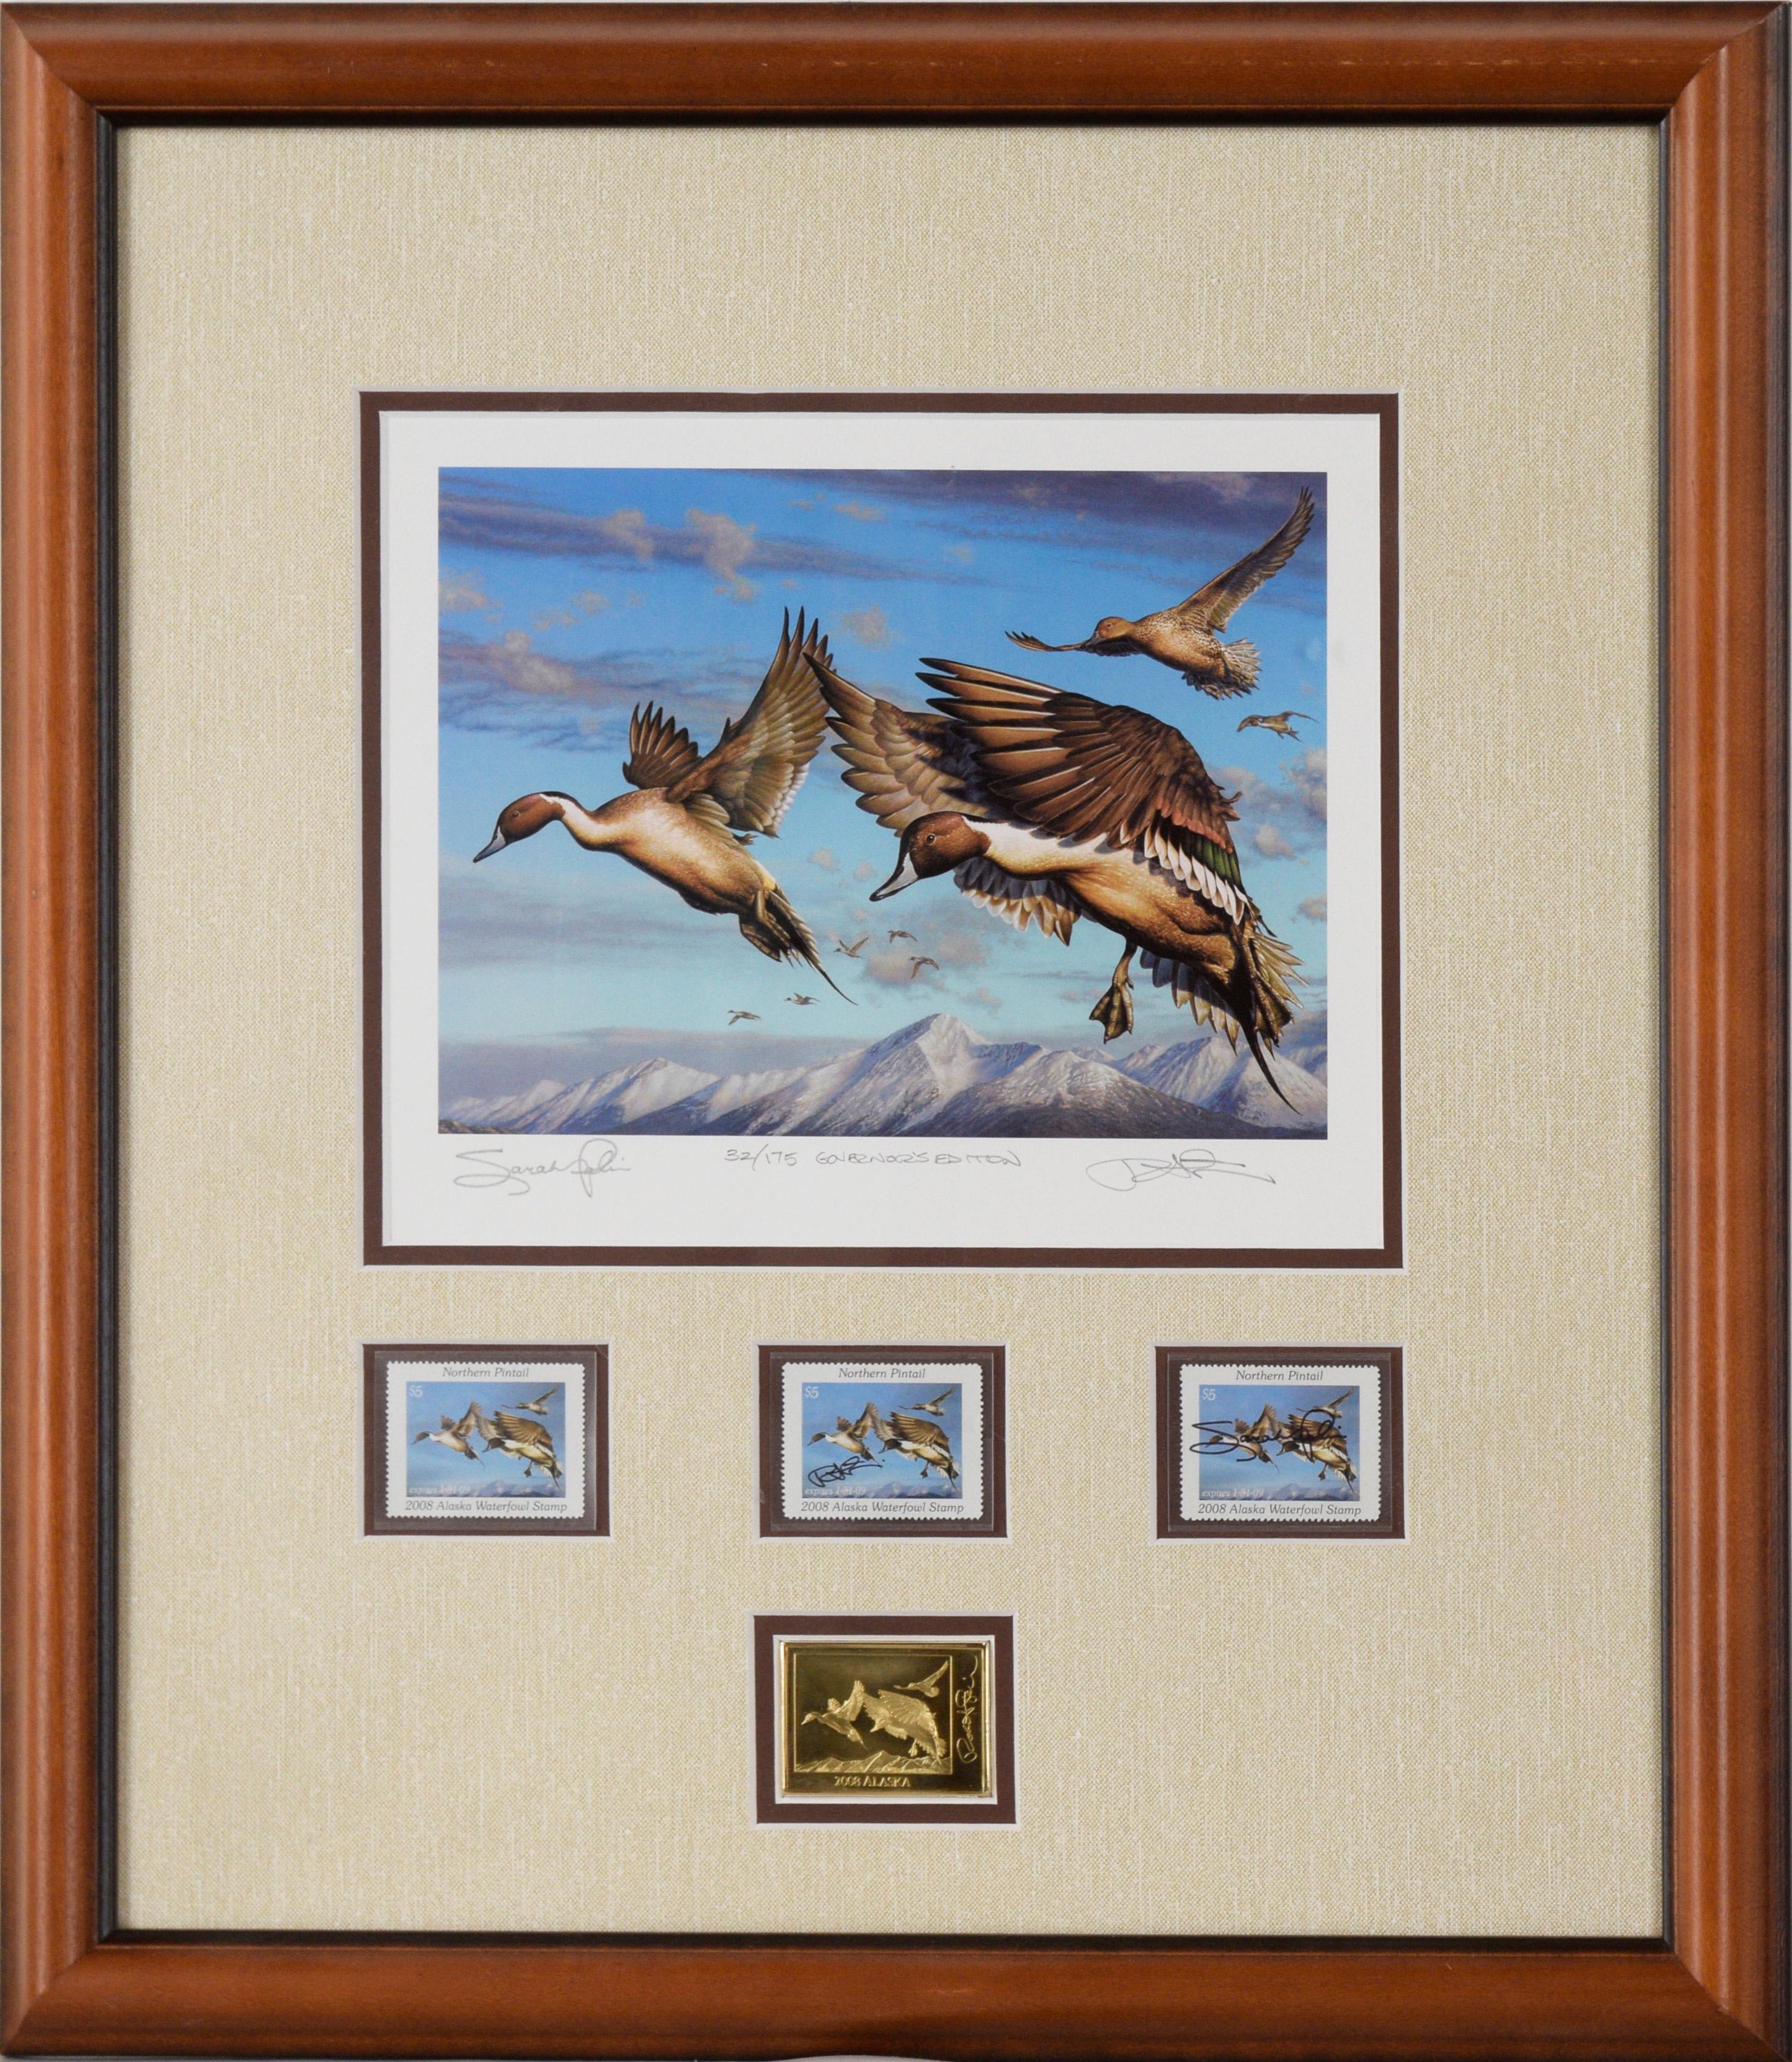 Impression du timbre 2008 sur le canard d'Alaska
2008 Alaska Duck Stamp Print de Robert Steiner (américain, né en 1949). Quatre tirages de timbres de canard de l'Alaska constituent le point de mire avec 